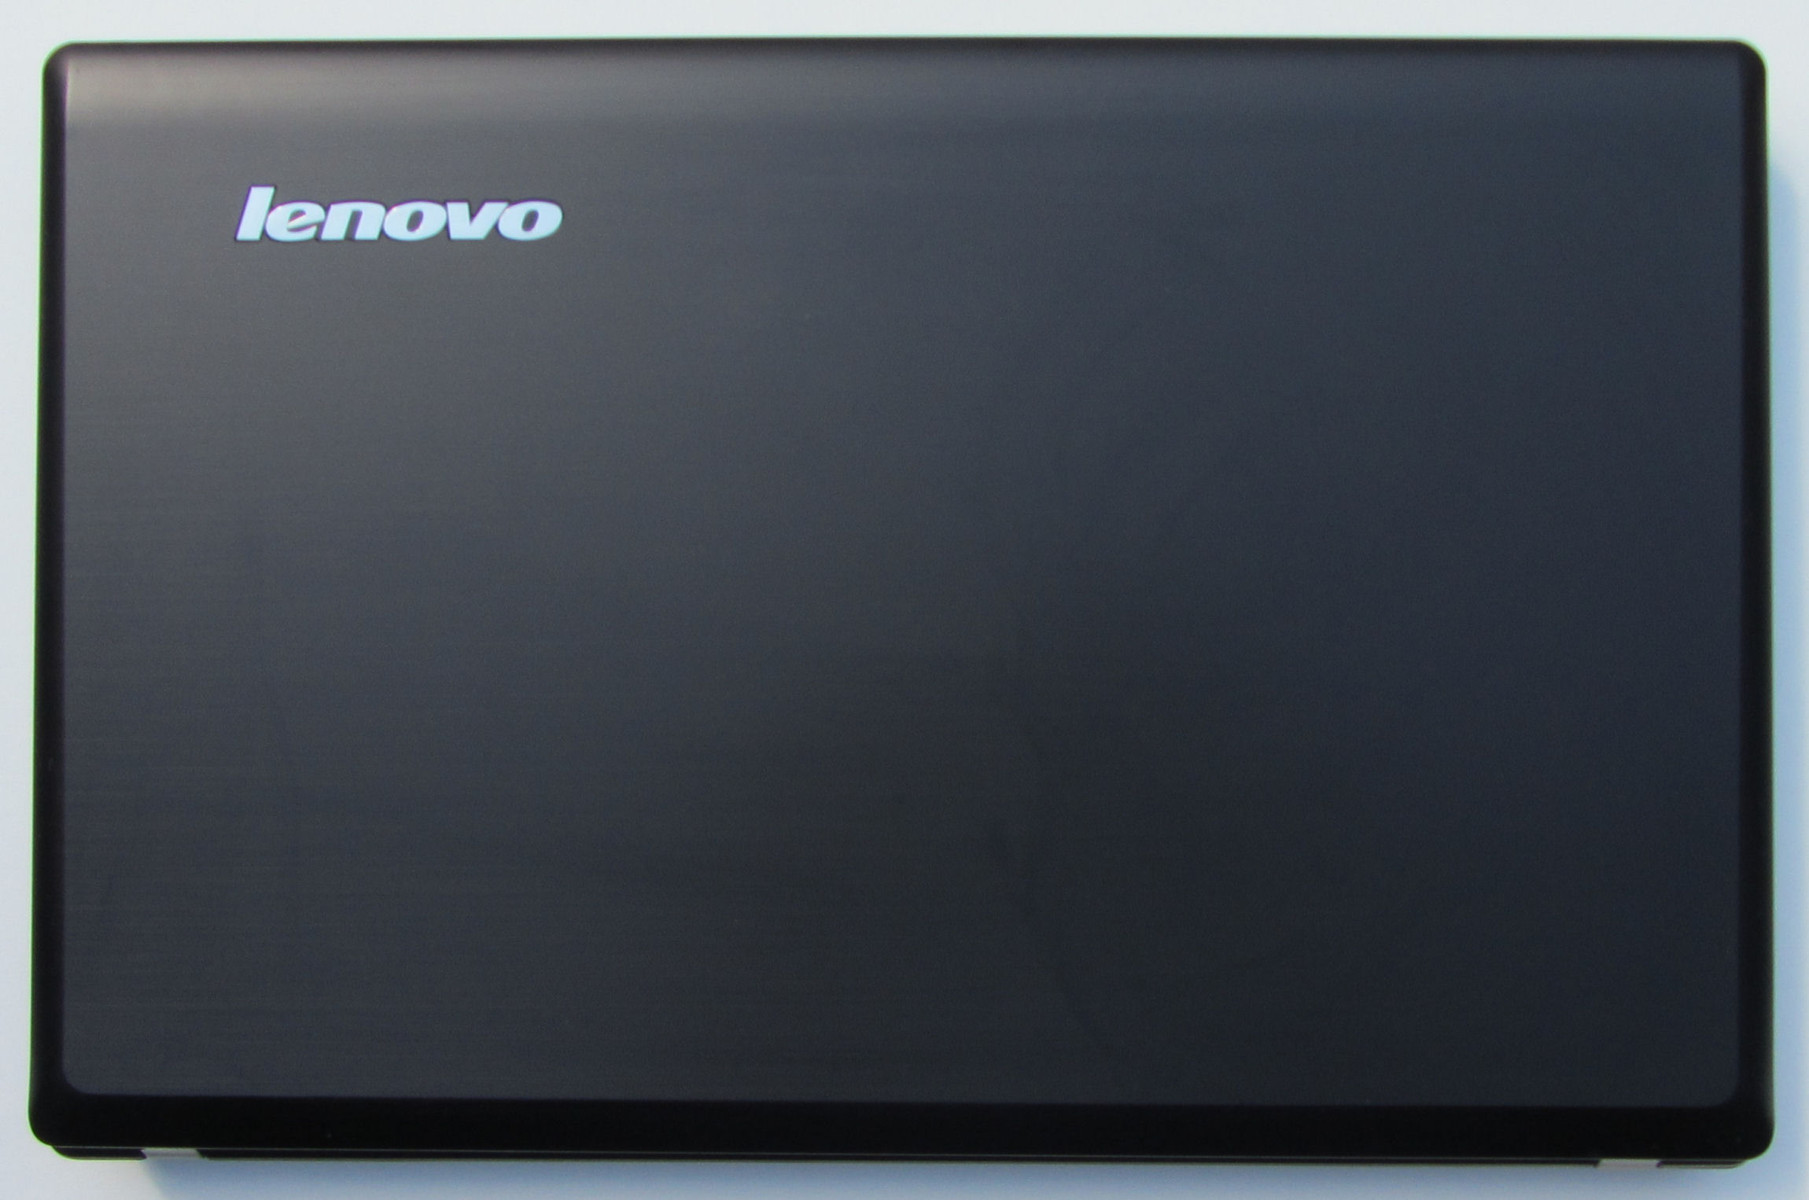 Ноутбук леново 580. Lenovo g580. Ноутбук Lenovo g580. Lenovo IDEAPAD g580g. Lenovo g580 i3.